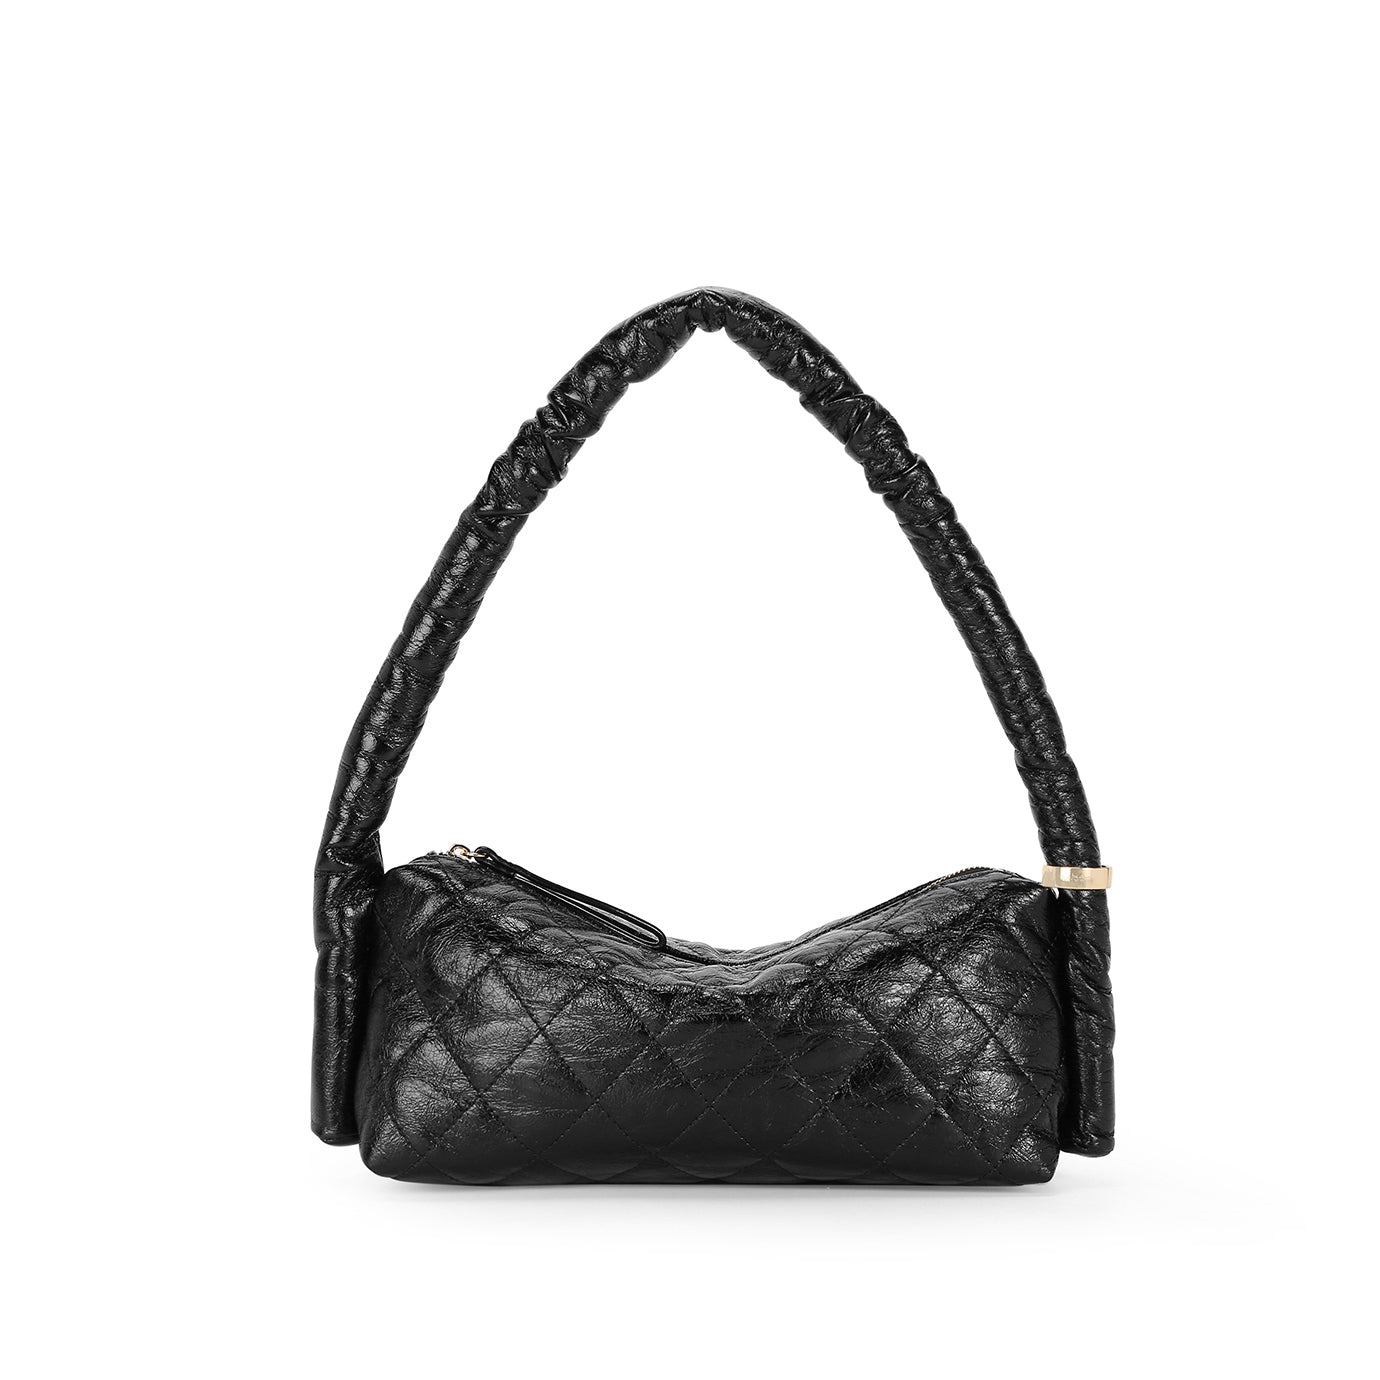 Baguette bag in black croco-like leather